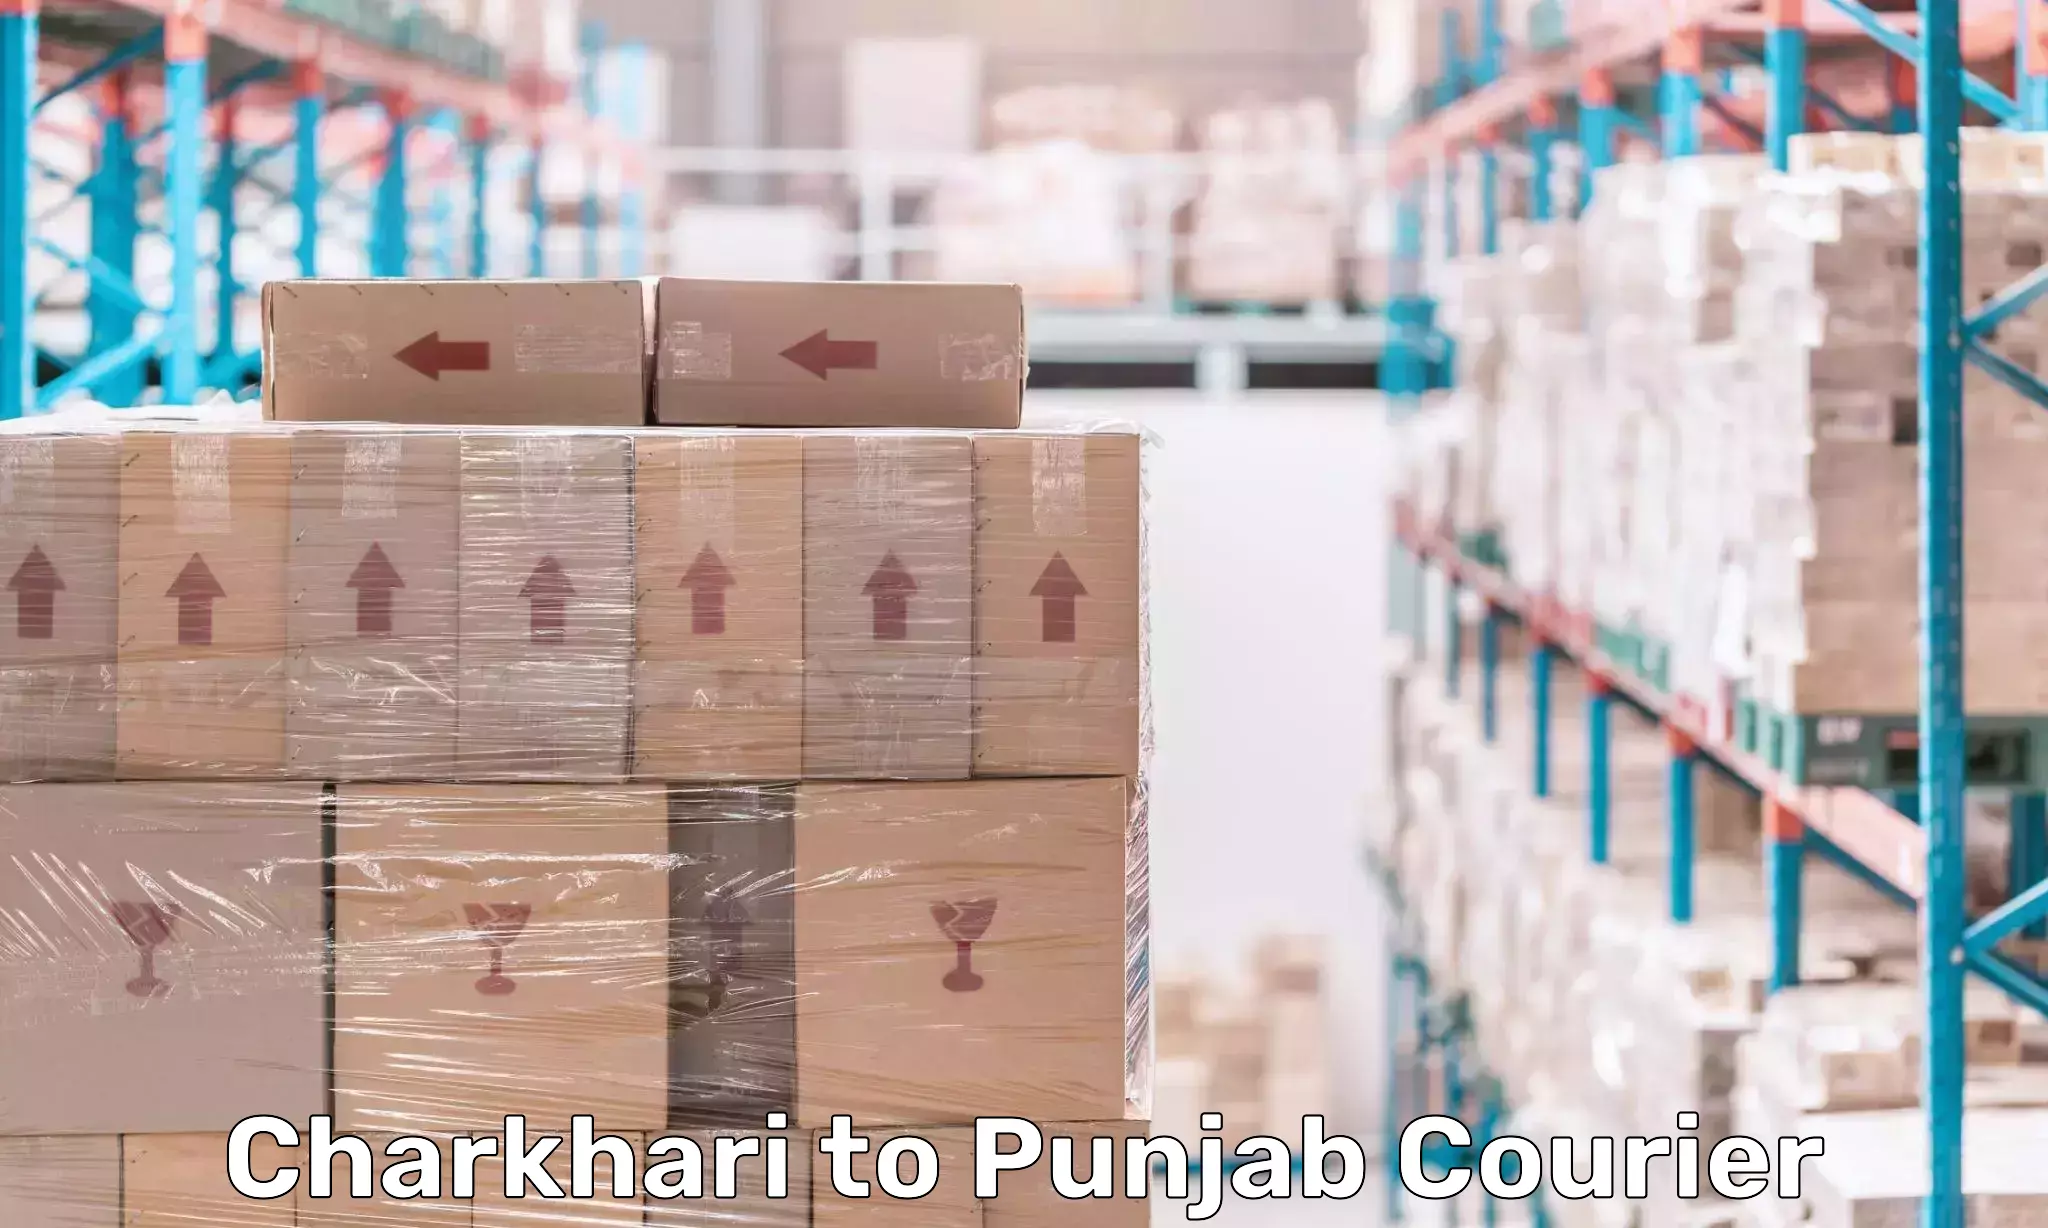 Efficient order fulfillment in Charkhari to Khanna